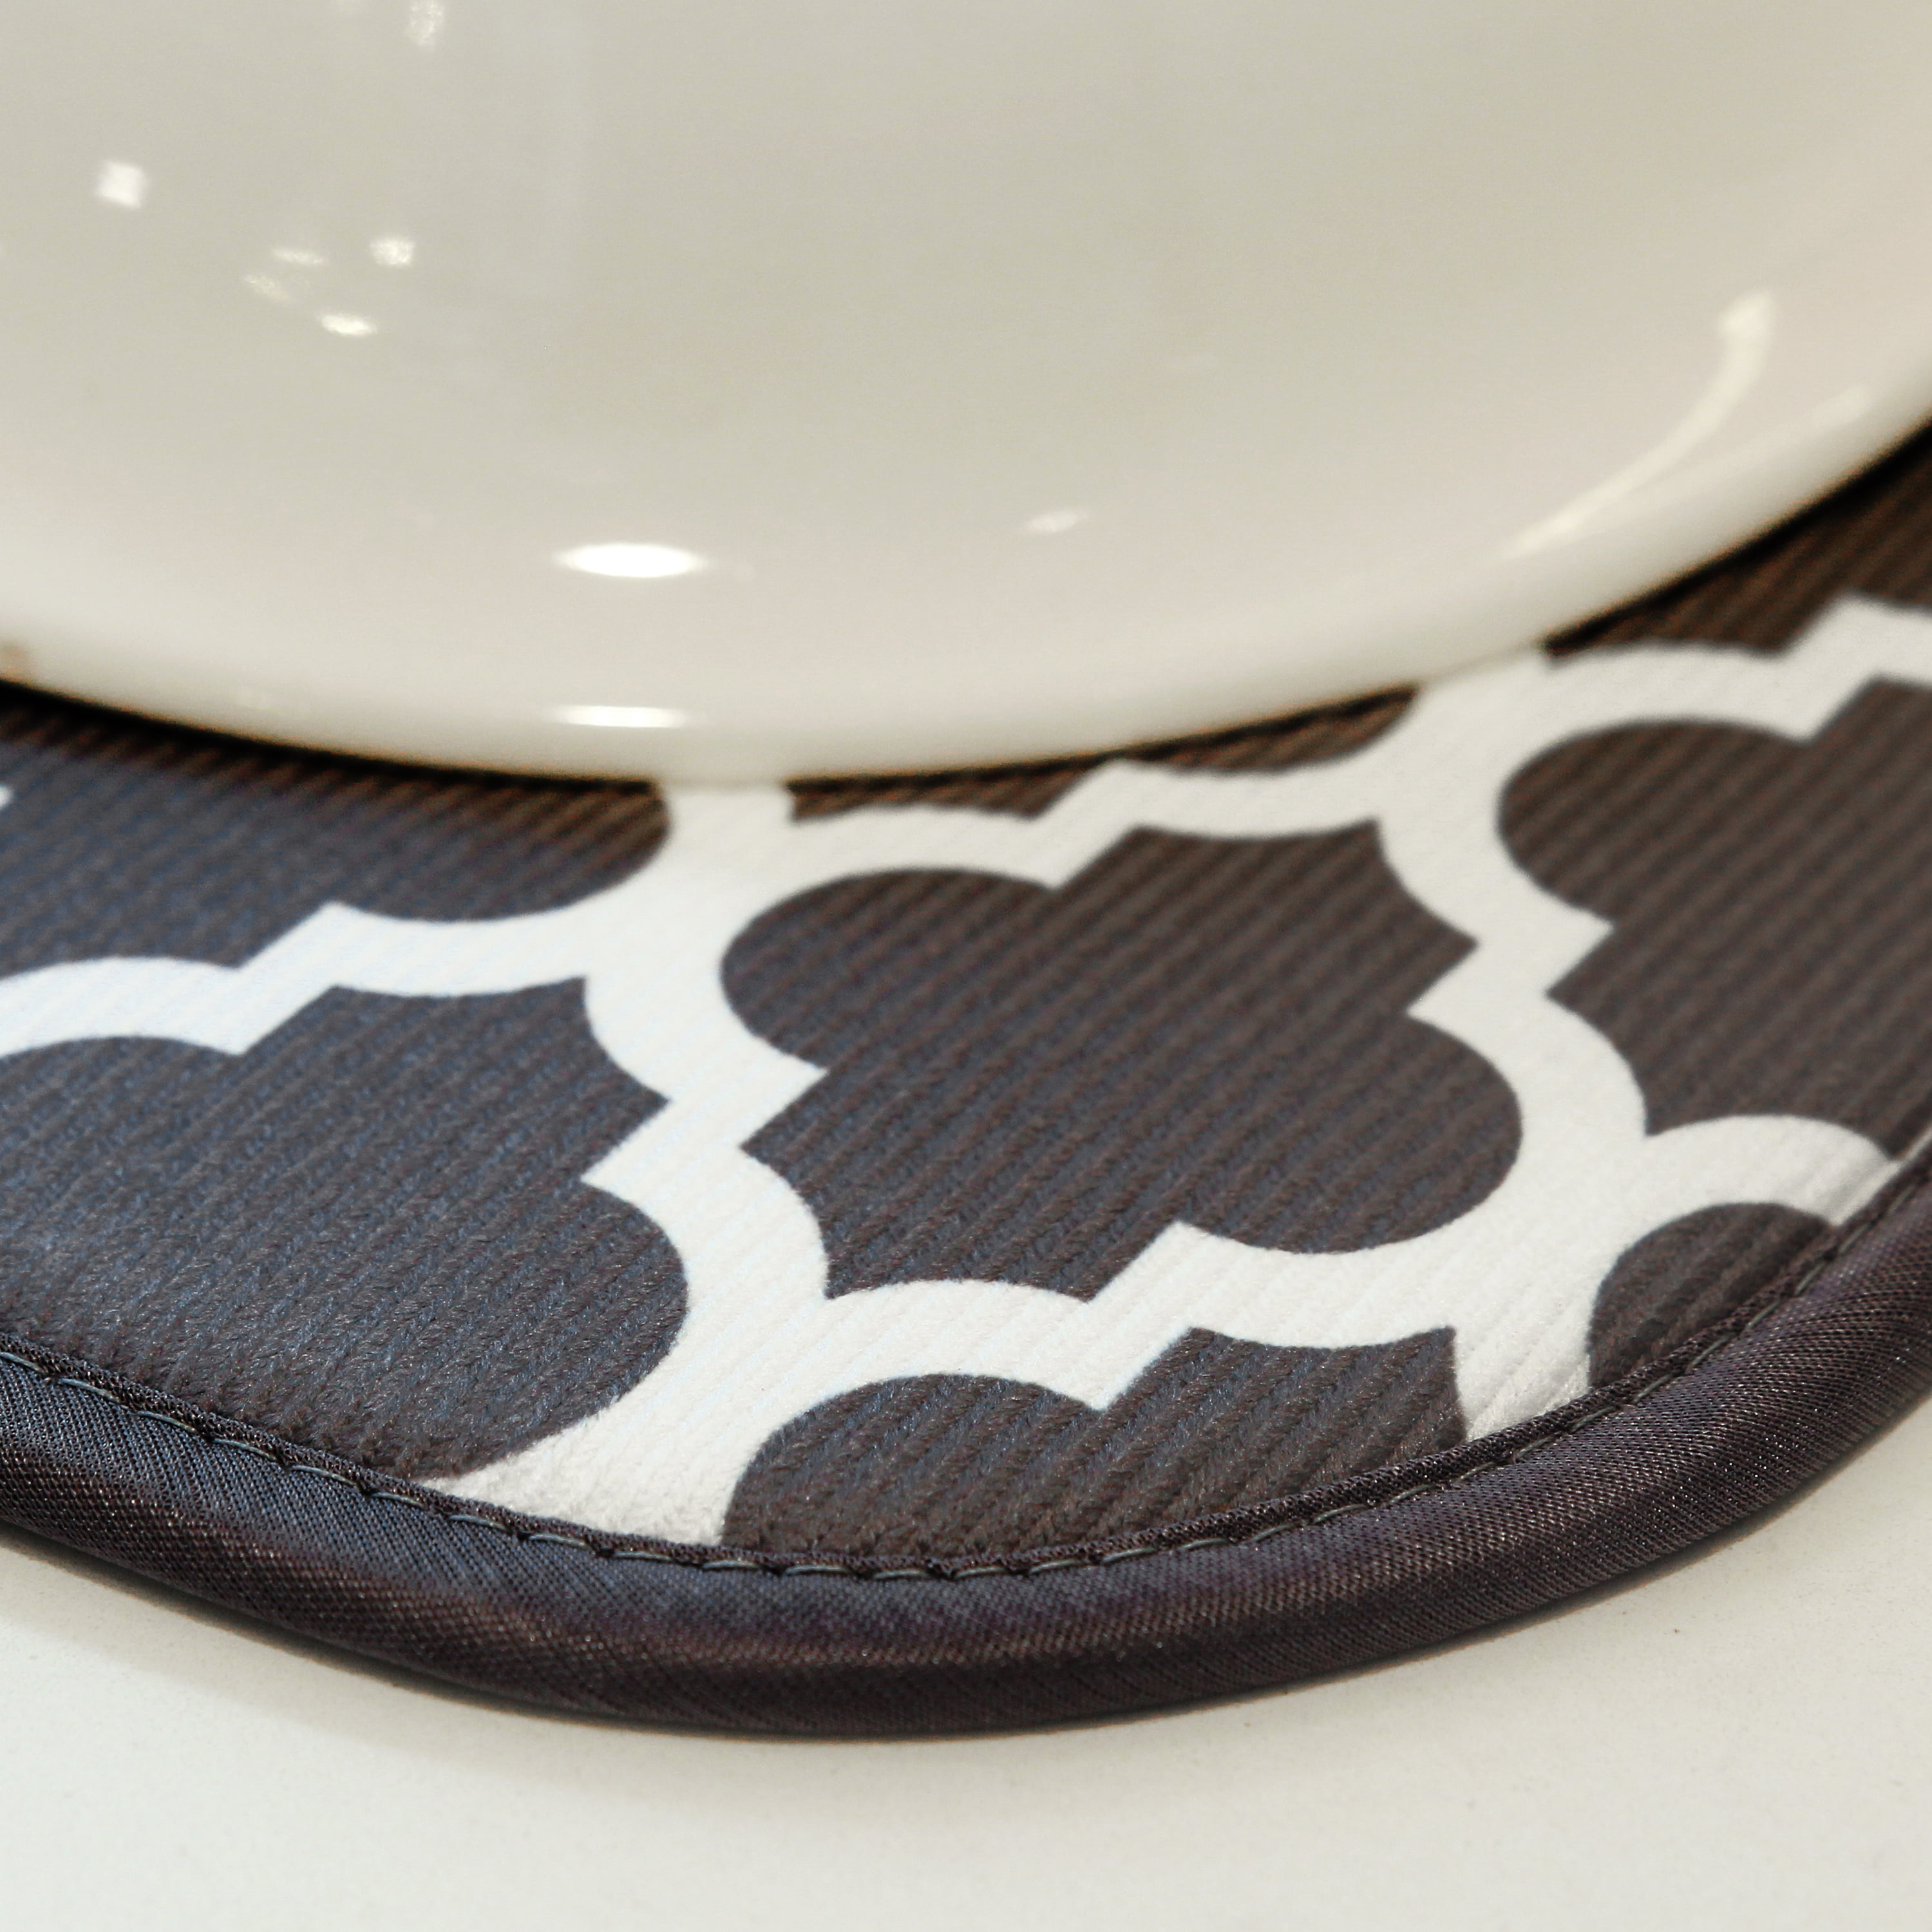 Teal XL Reversible Microfiber Dish Drying Mat by S&T Inc. at Fleet Farm